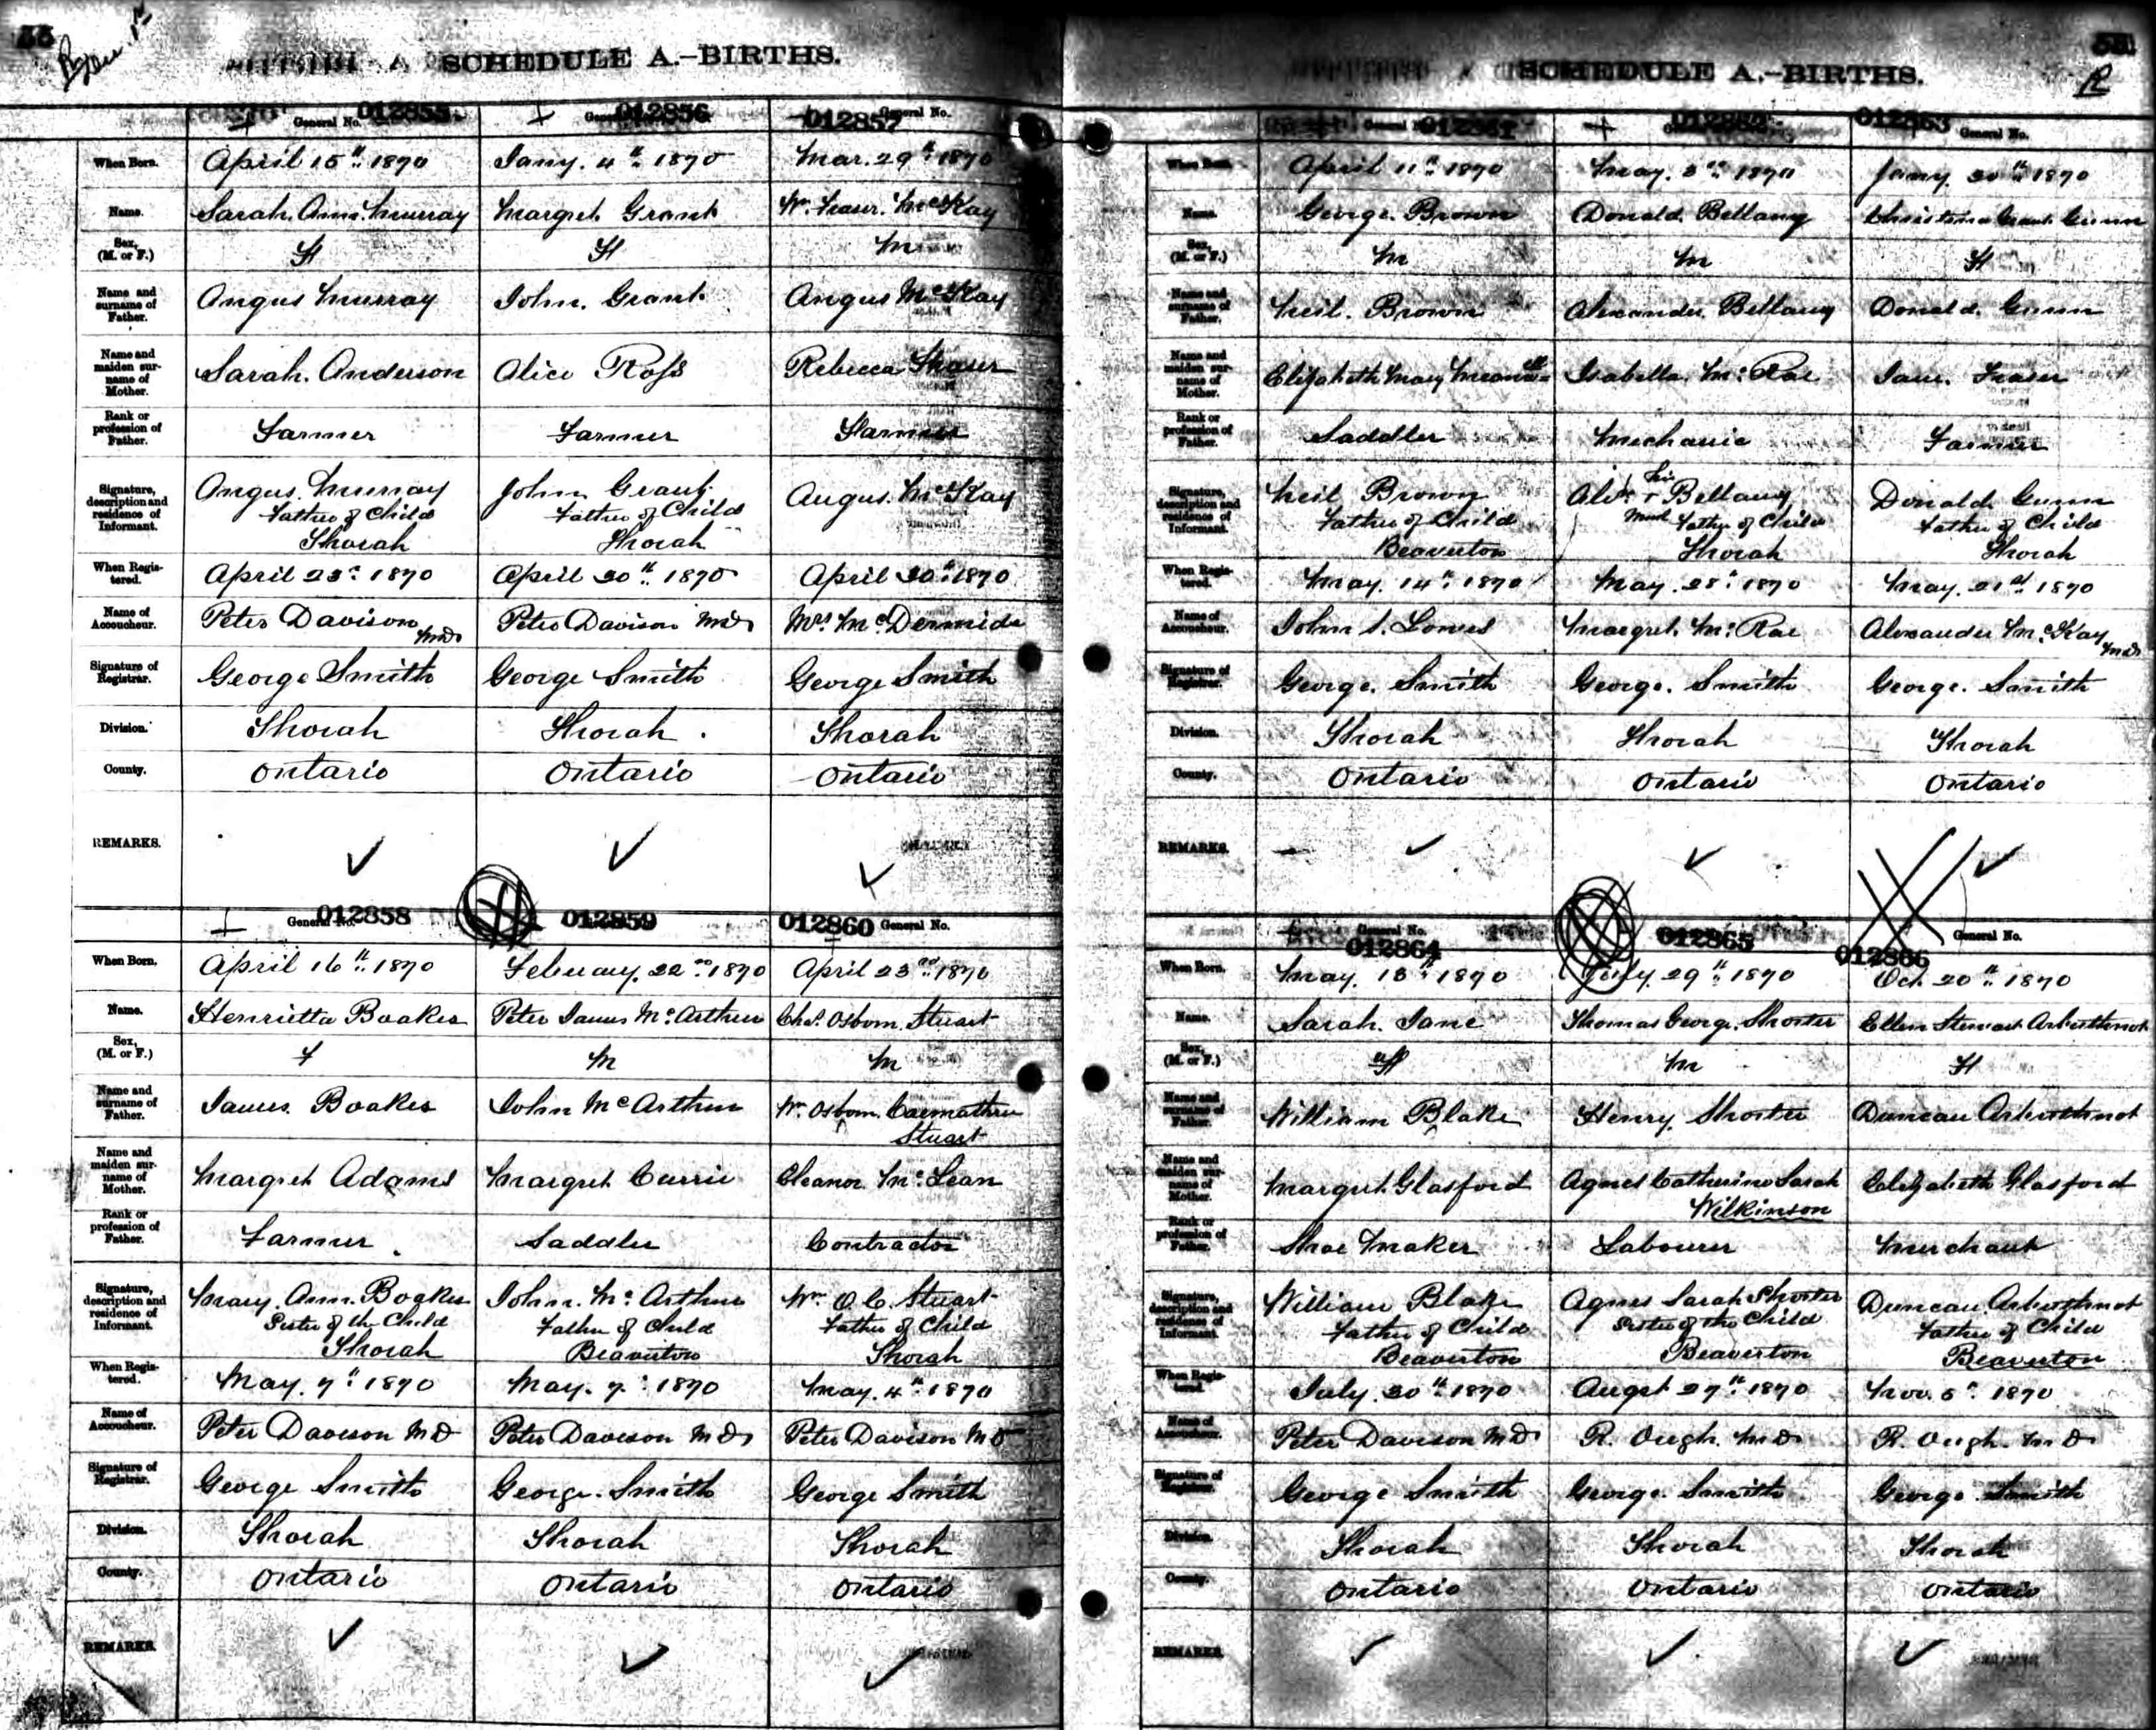 birth record - peter james mcarthur 1870.jpg